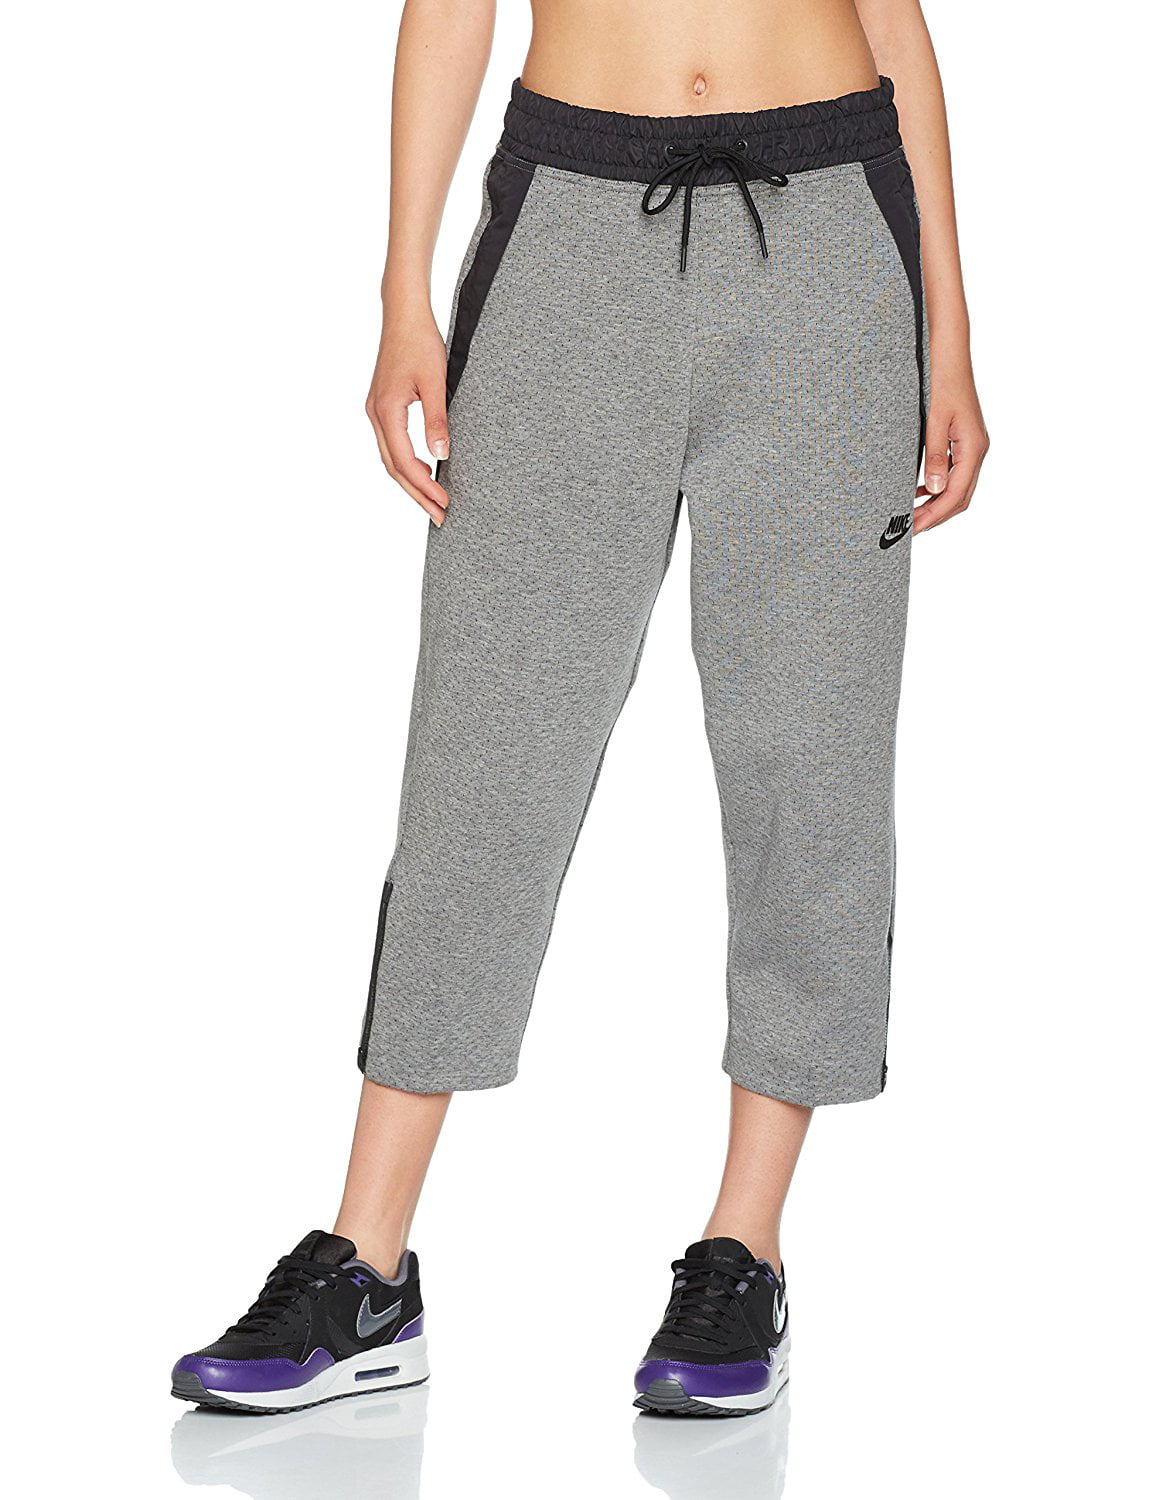 Nike Women's Sportswear Tech Pack Cropped Pants, Carbon Heather/Black, Small  